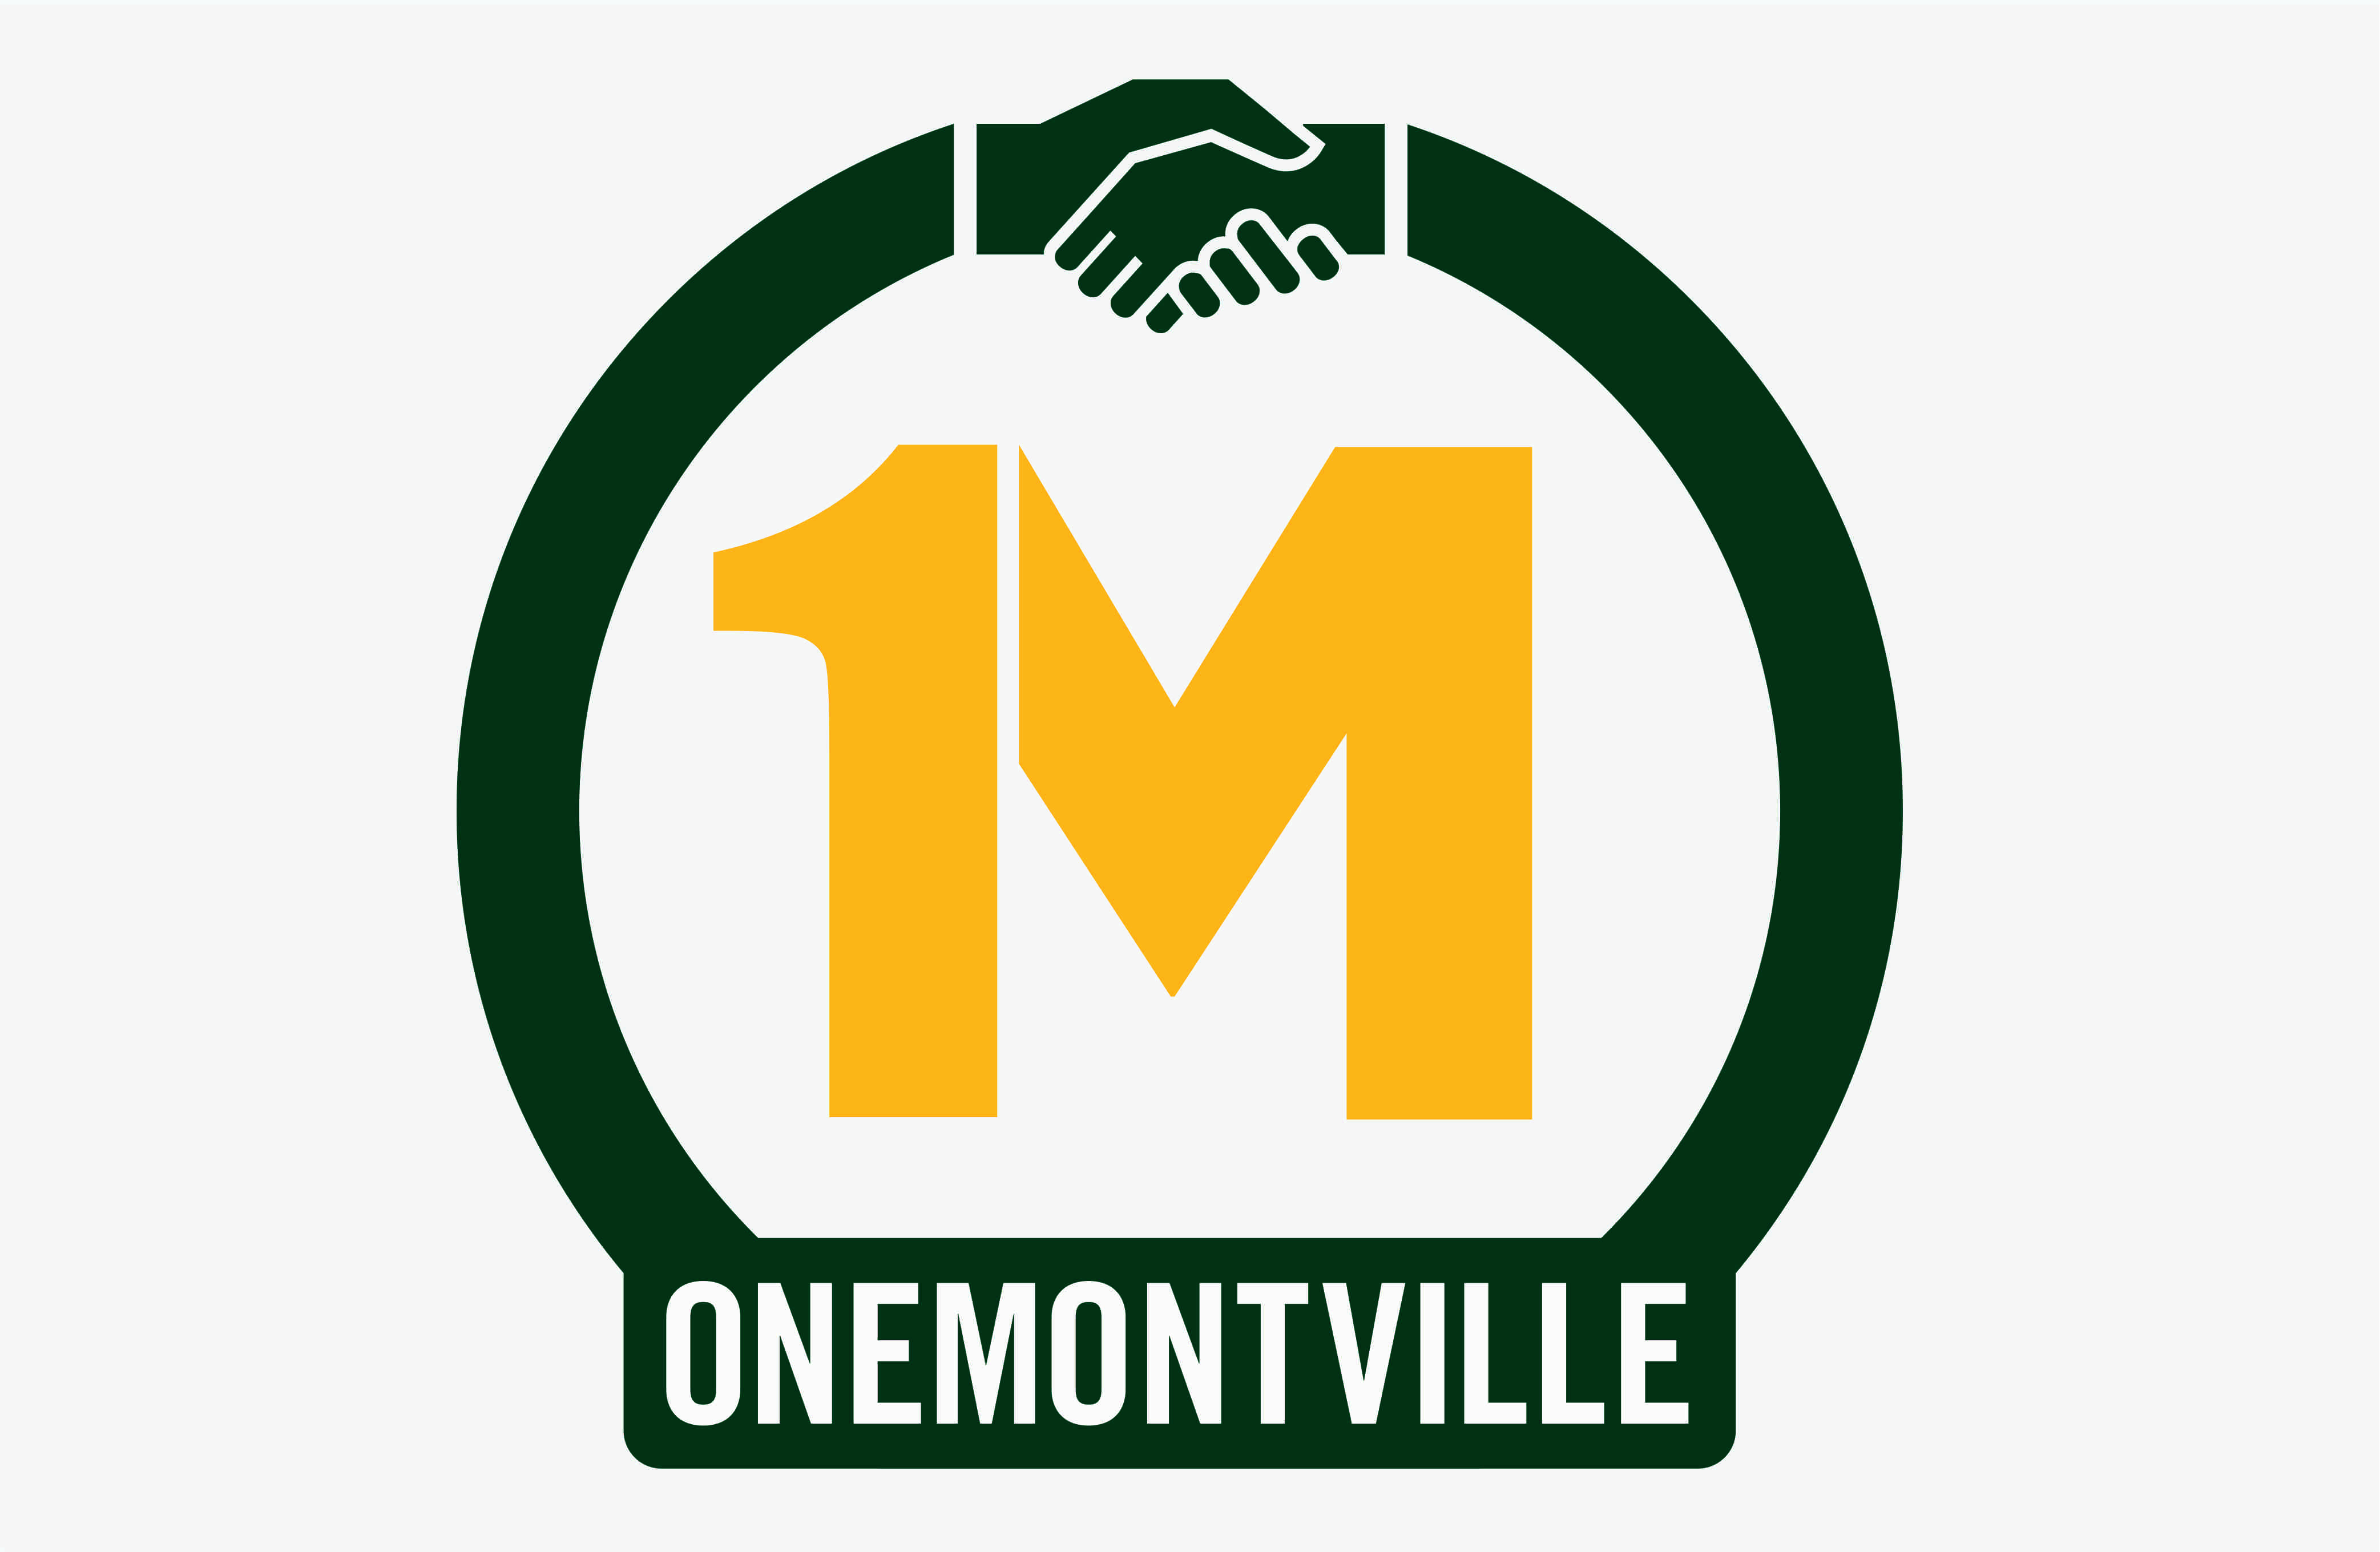 One Montville